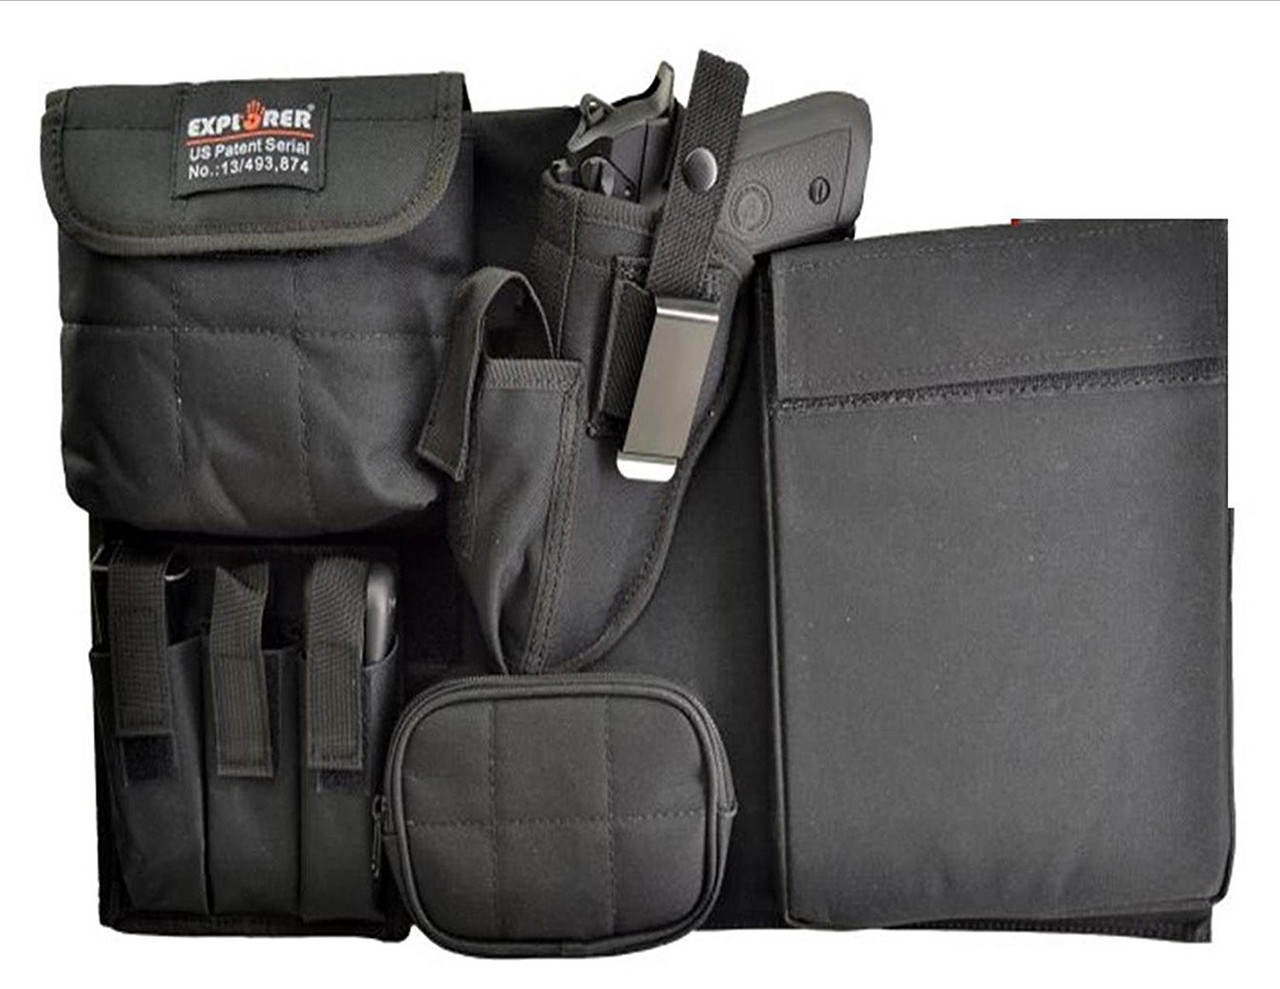 Tactical Adjustable Seat Vehicle Car Pistol Handgun Gun Holster Holder Universal with Tactical Flashlight Loop